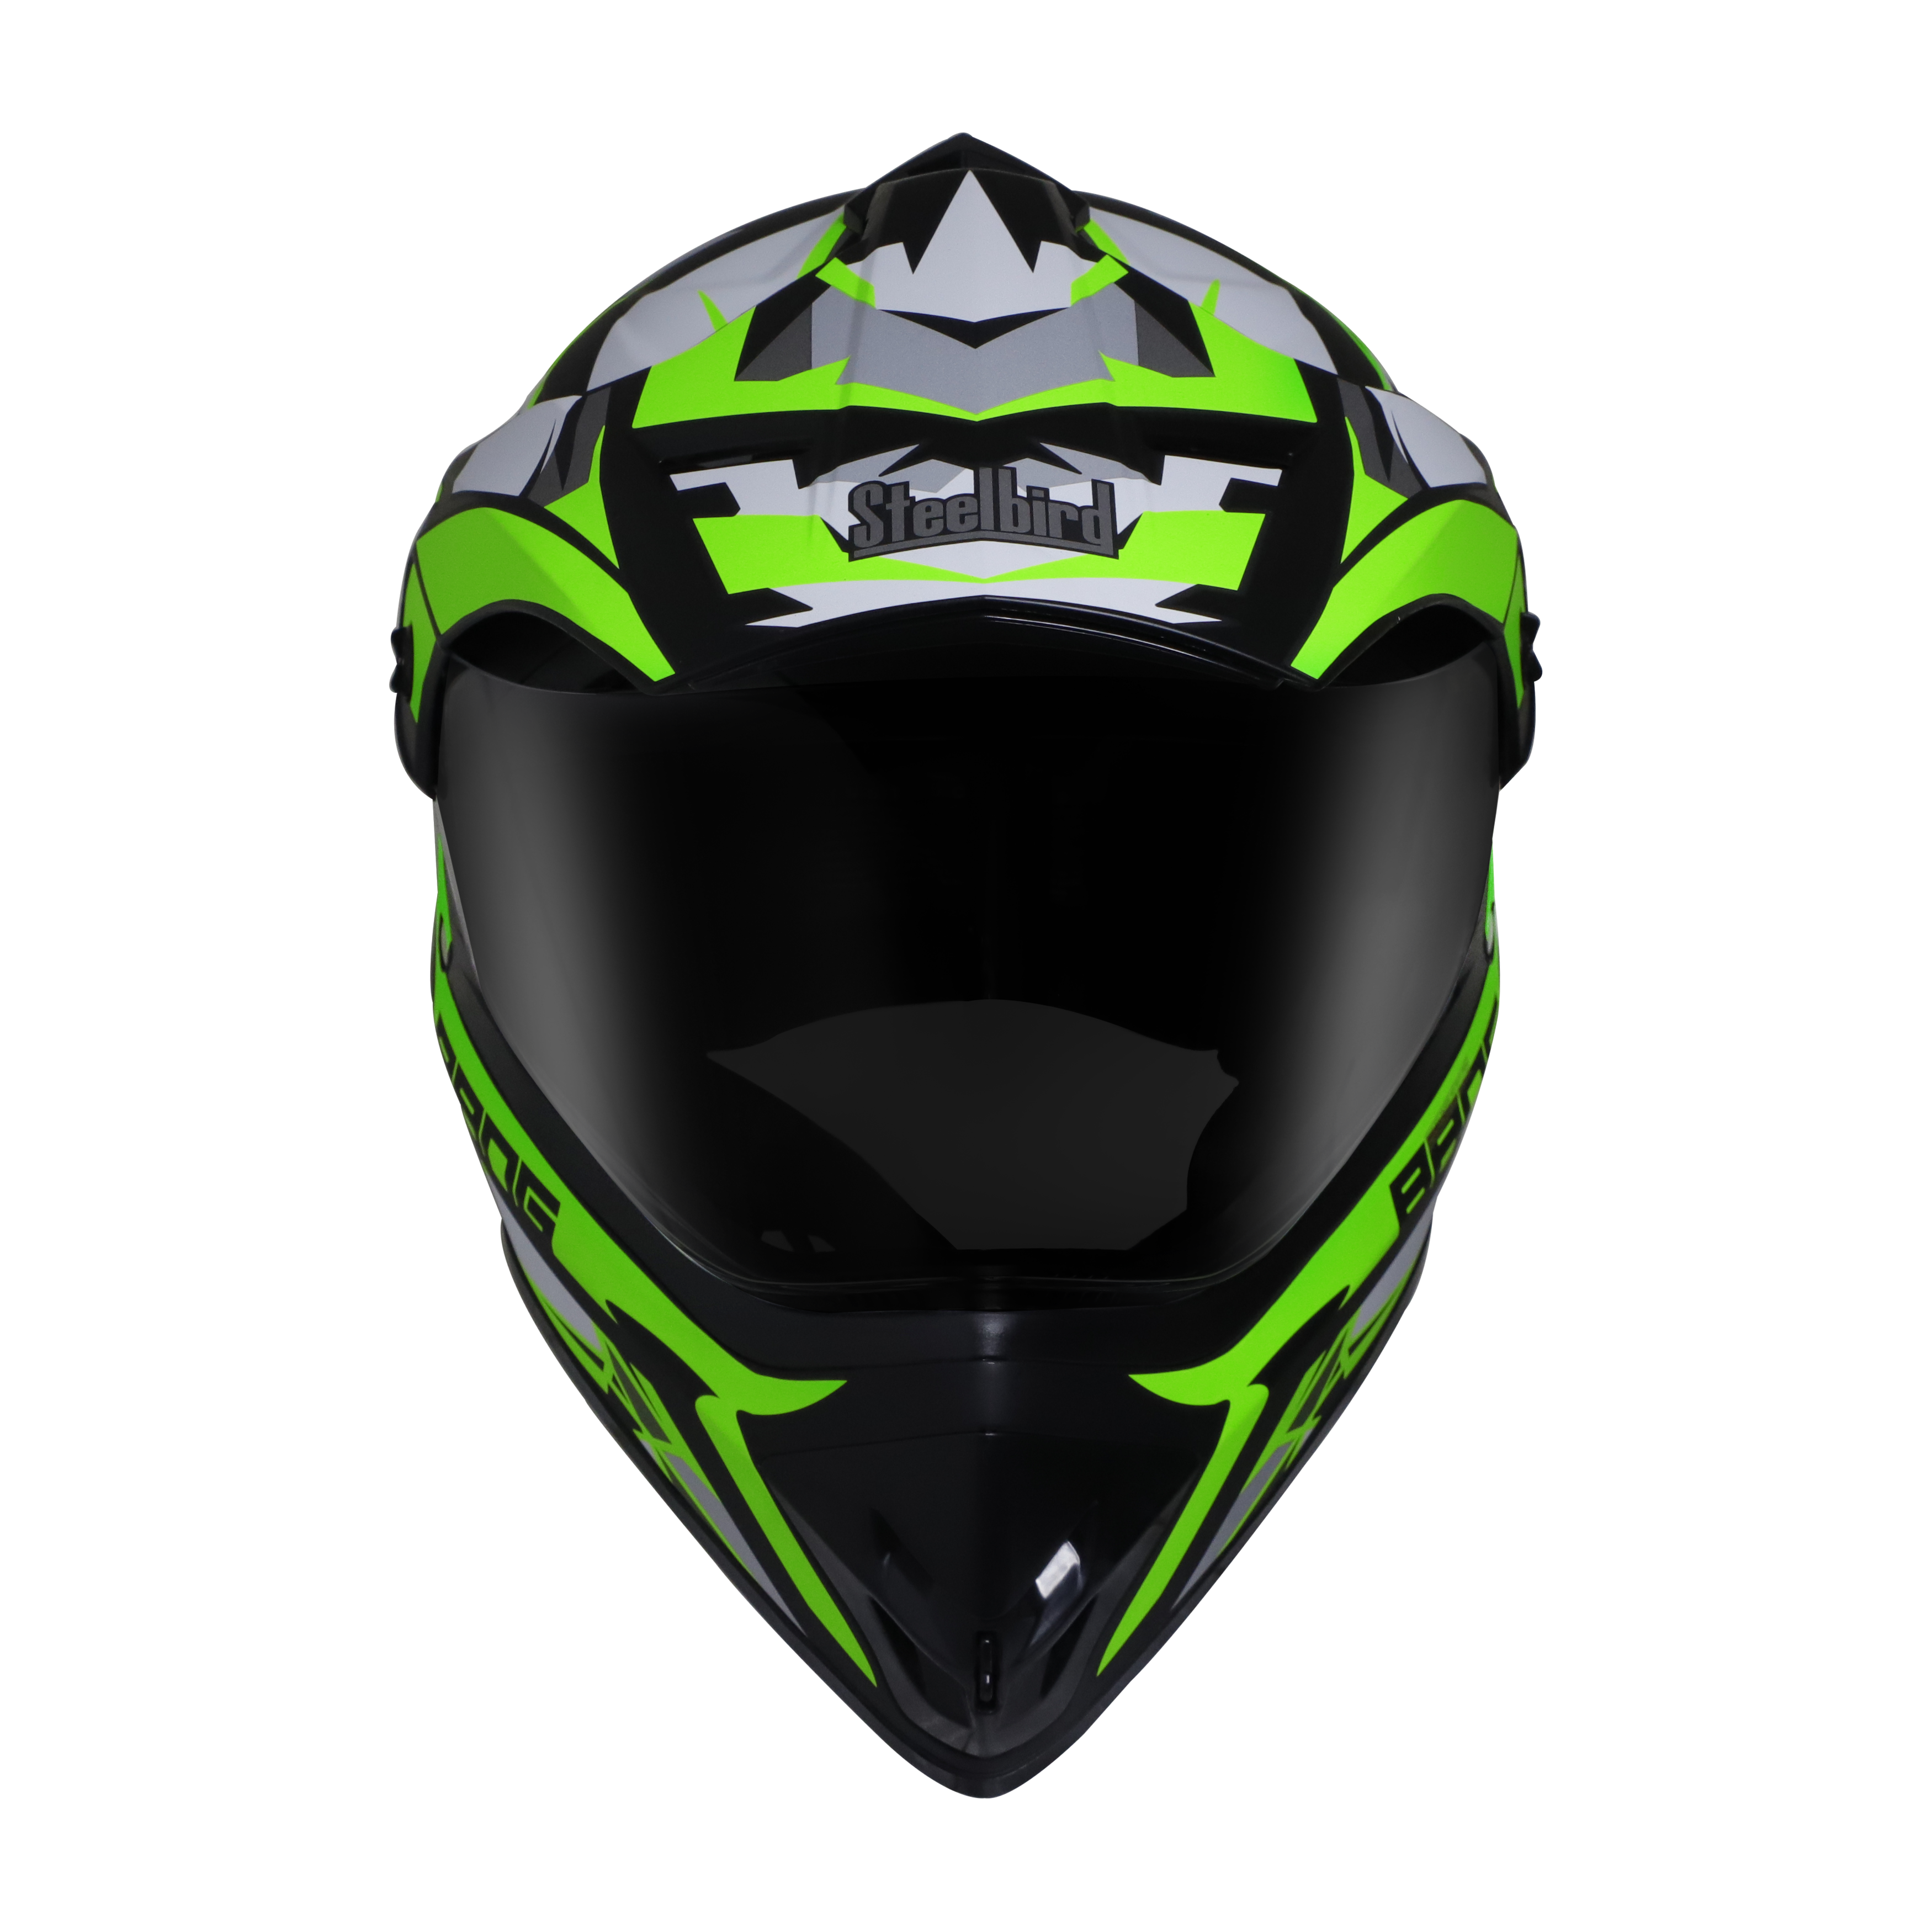 Steelbird Off Road Bang KTN ISI Certified ABS Material Shell Motocross Helmet (Matt Black Neon With Smoke Visor)